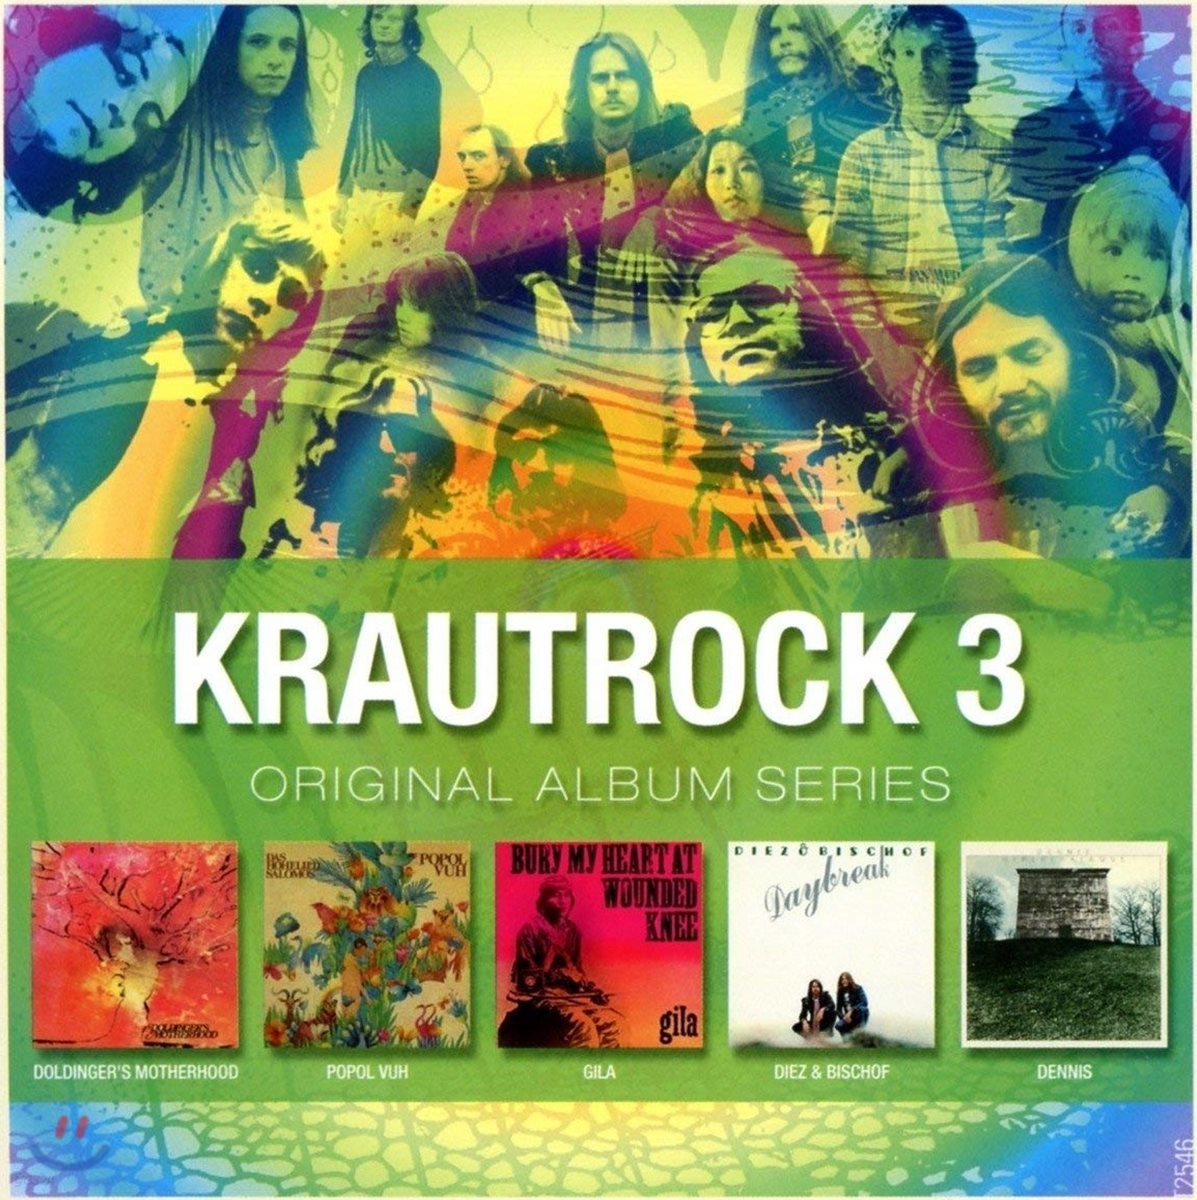 Krautrock - Original Album Series Vol.3 크라우트록 오리지널 앨범 시리즈 3집 [Deluxe Edition]